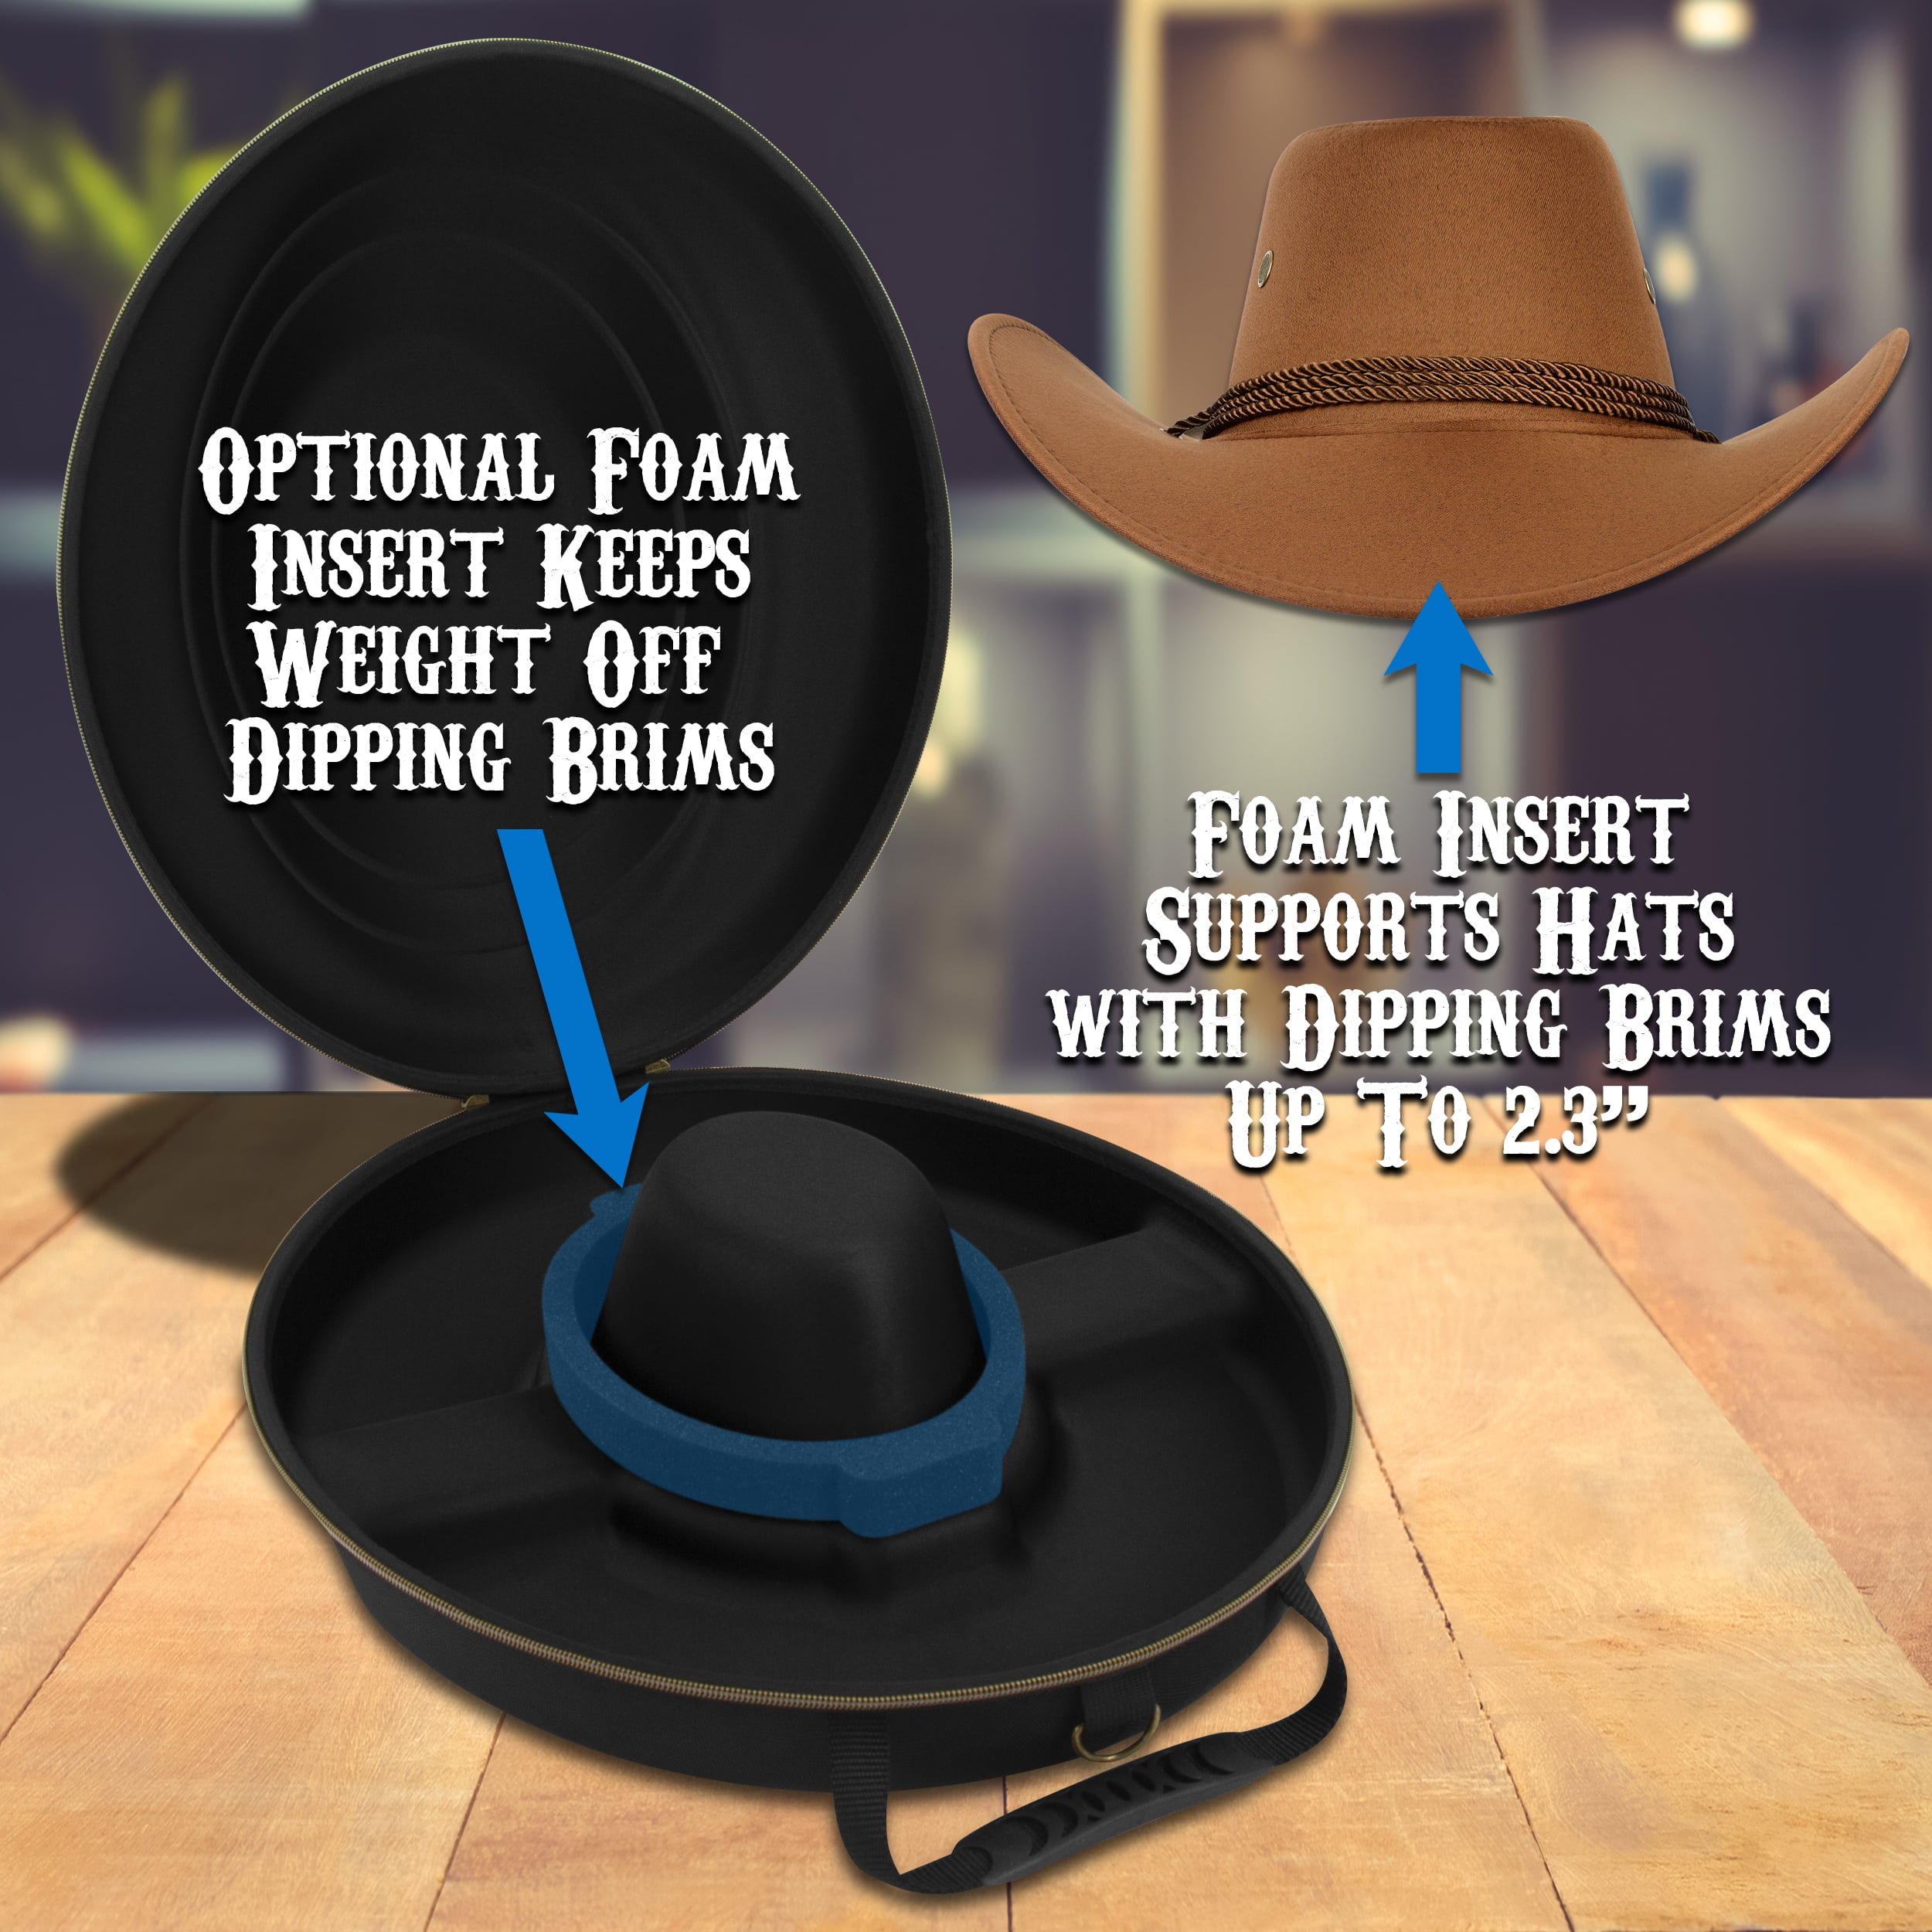 Sanchamy Hat Boxes for Women/Men Storage Large Round Felt Hat Box for  Travel Foldable Cowboy Hat Box…See more Sanchamy Hat Boxes for Women/Men  Storage